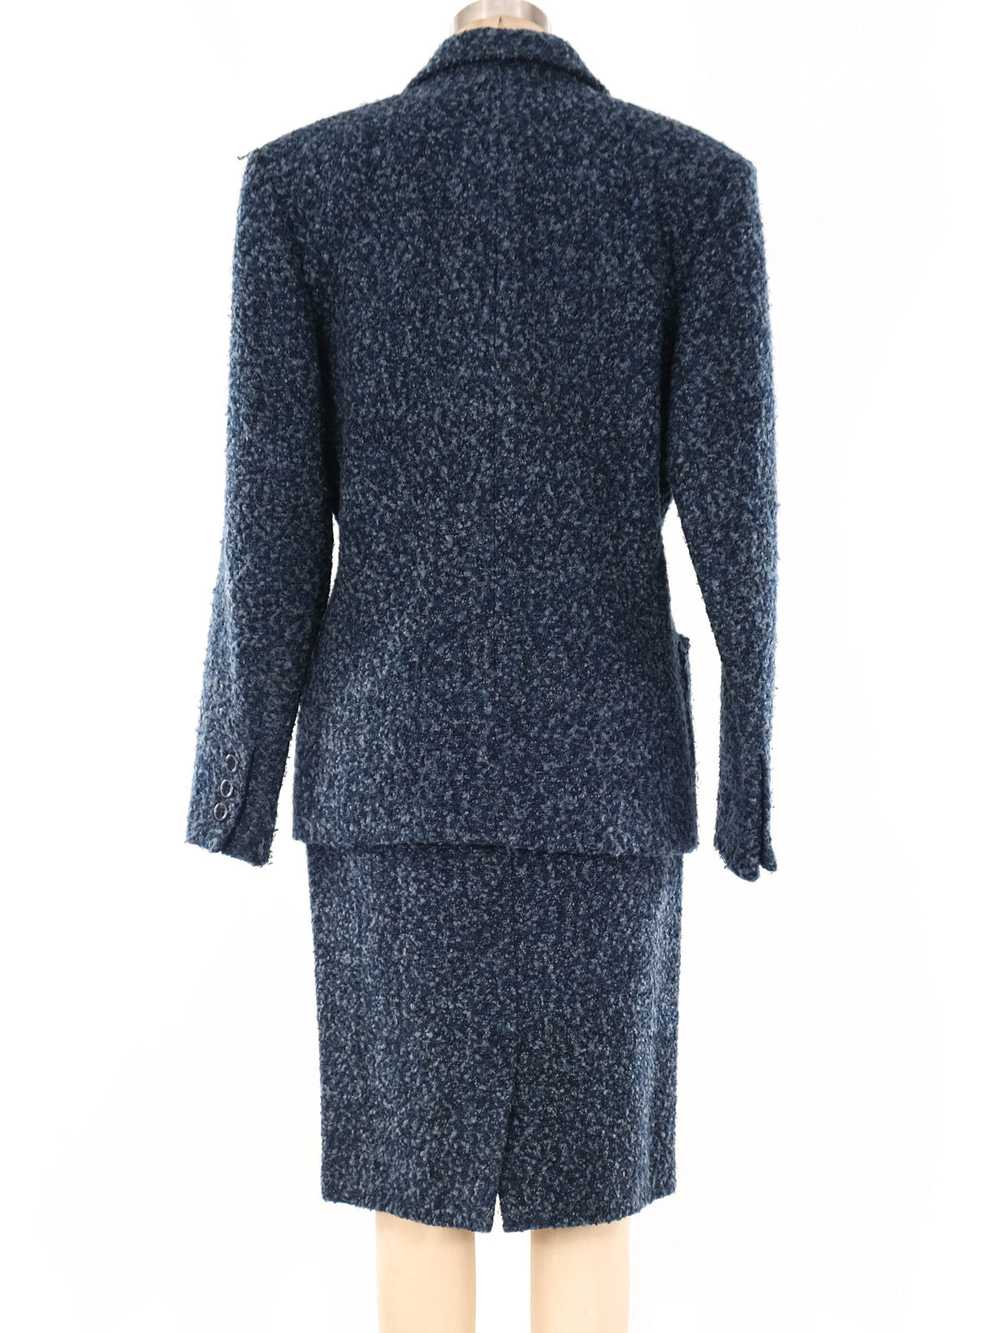 Yves Saint Laurent Boucle Tweed Suit - image 4